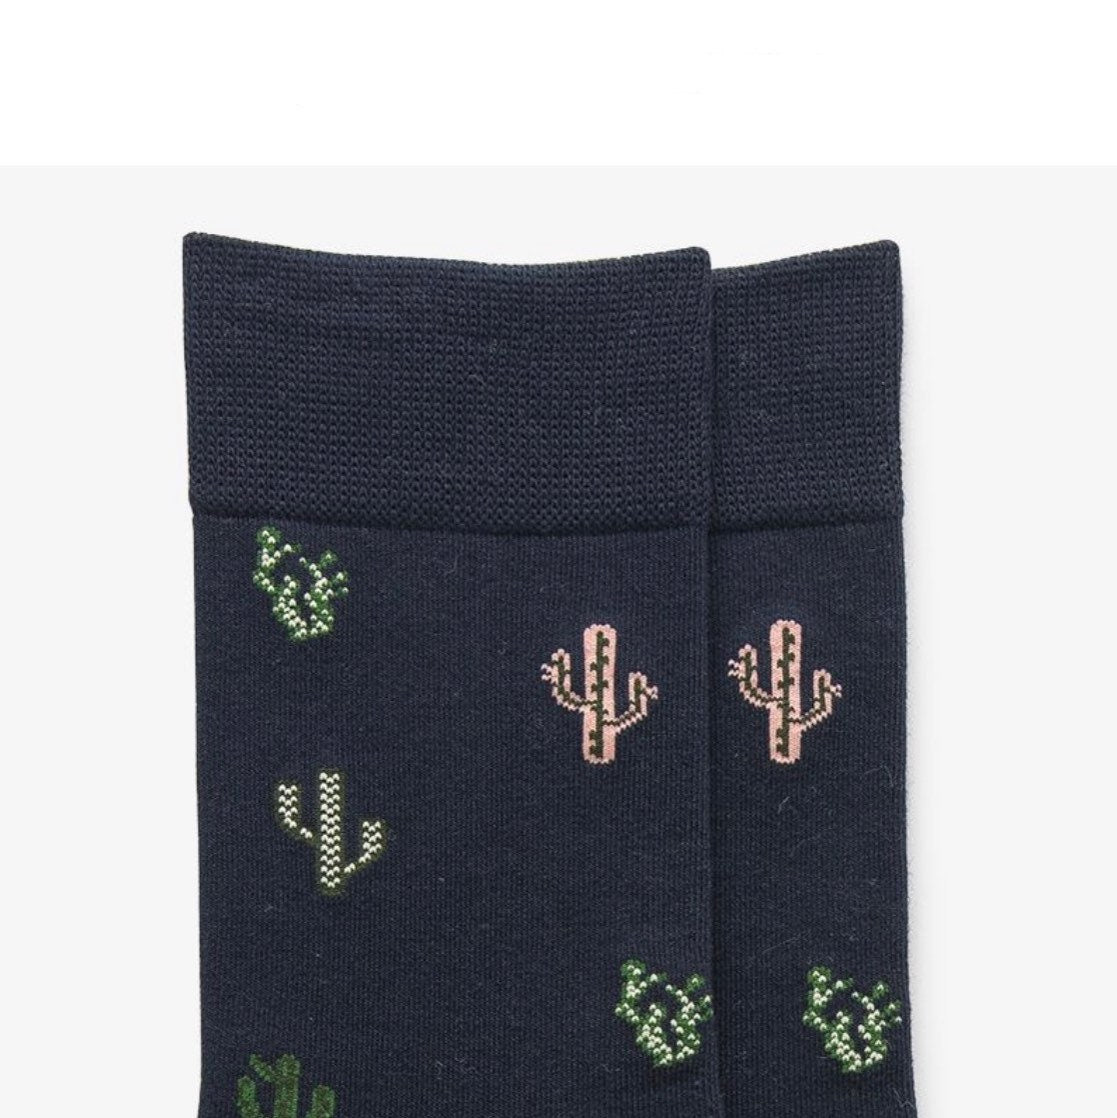 Miss June’s｜1 Pair cotton socks| Creative| Colorful | Cool | Patterned | Geometric socks| Unisex socks | Casual |